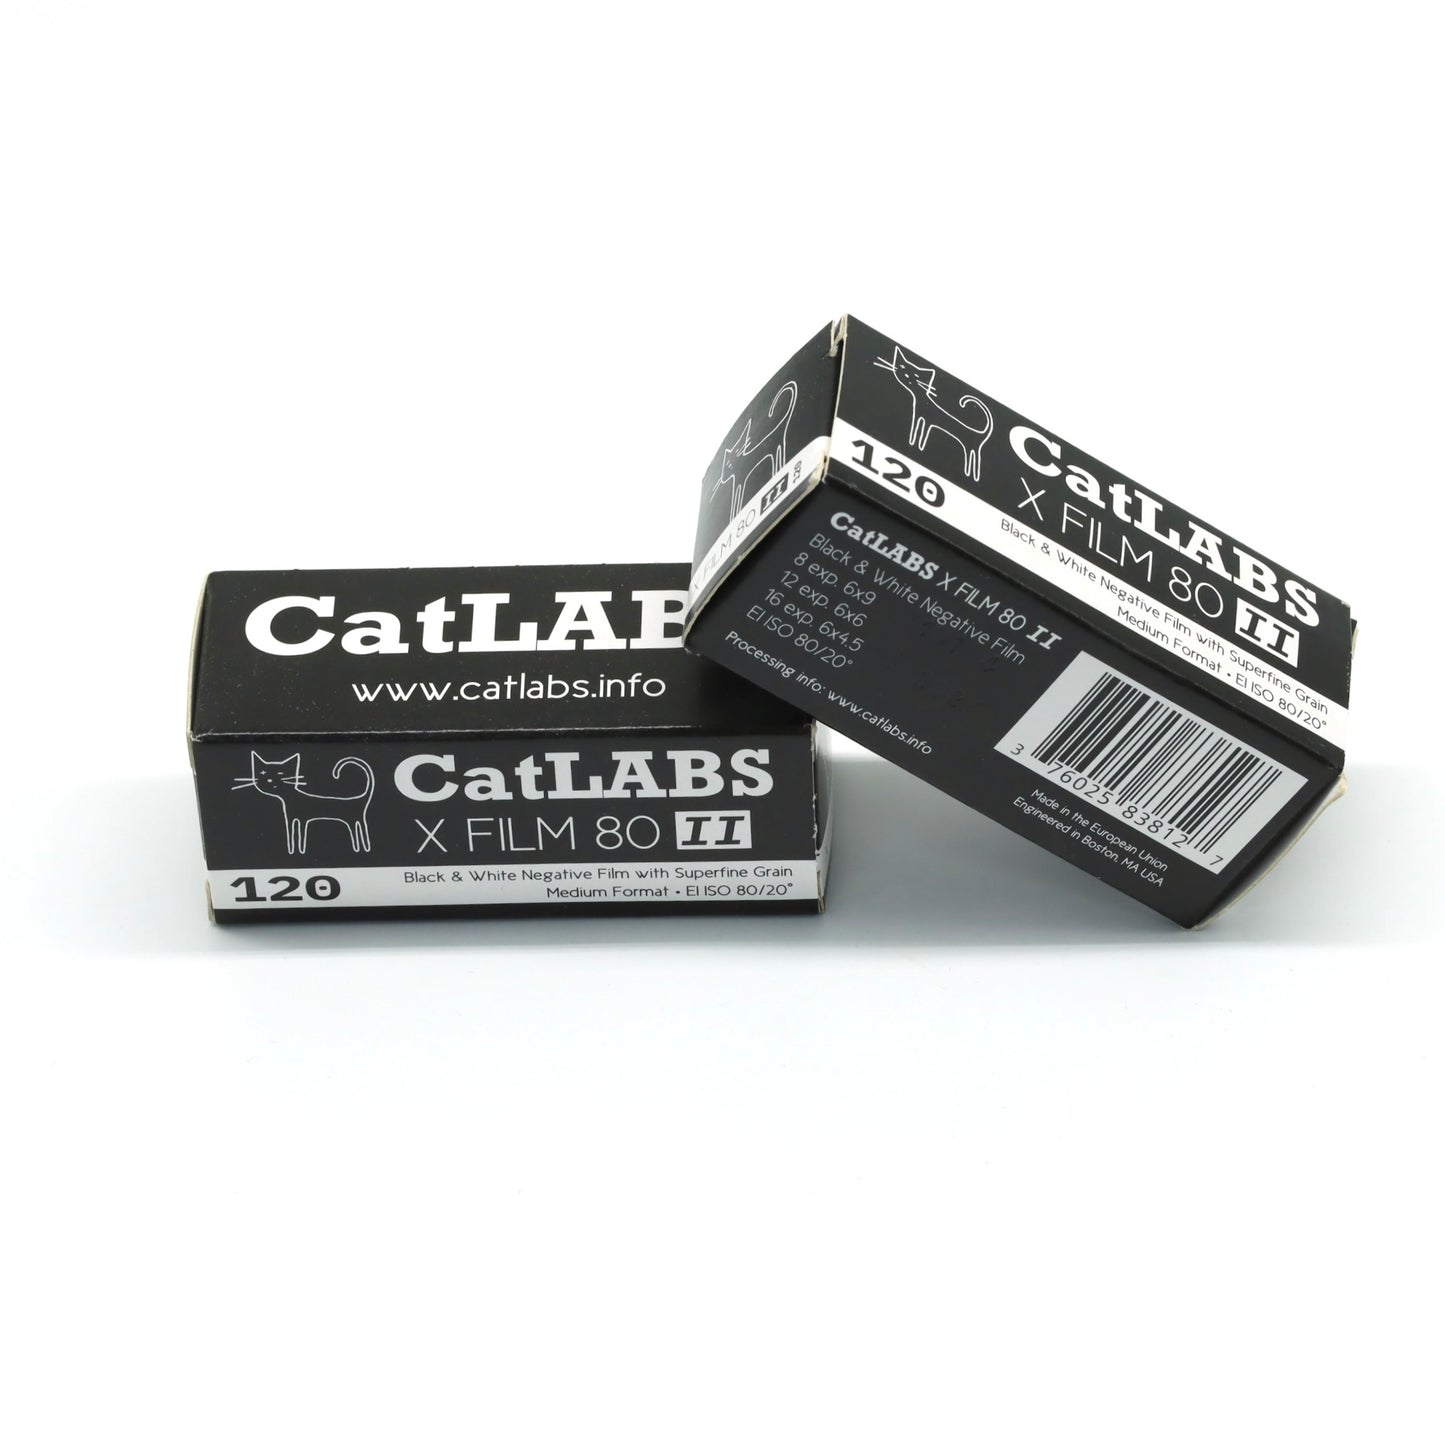 CatLABS X FILM 80 MKII BW Negative Film-120